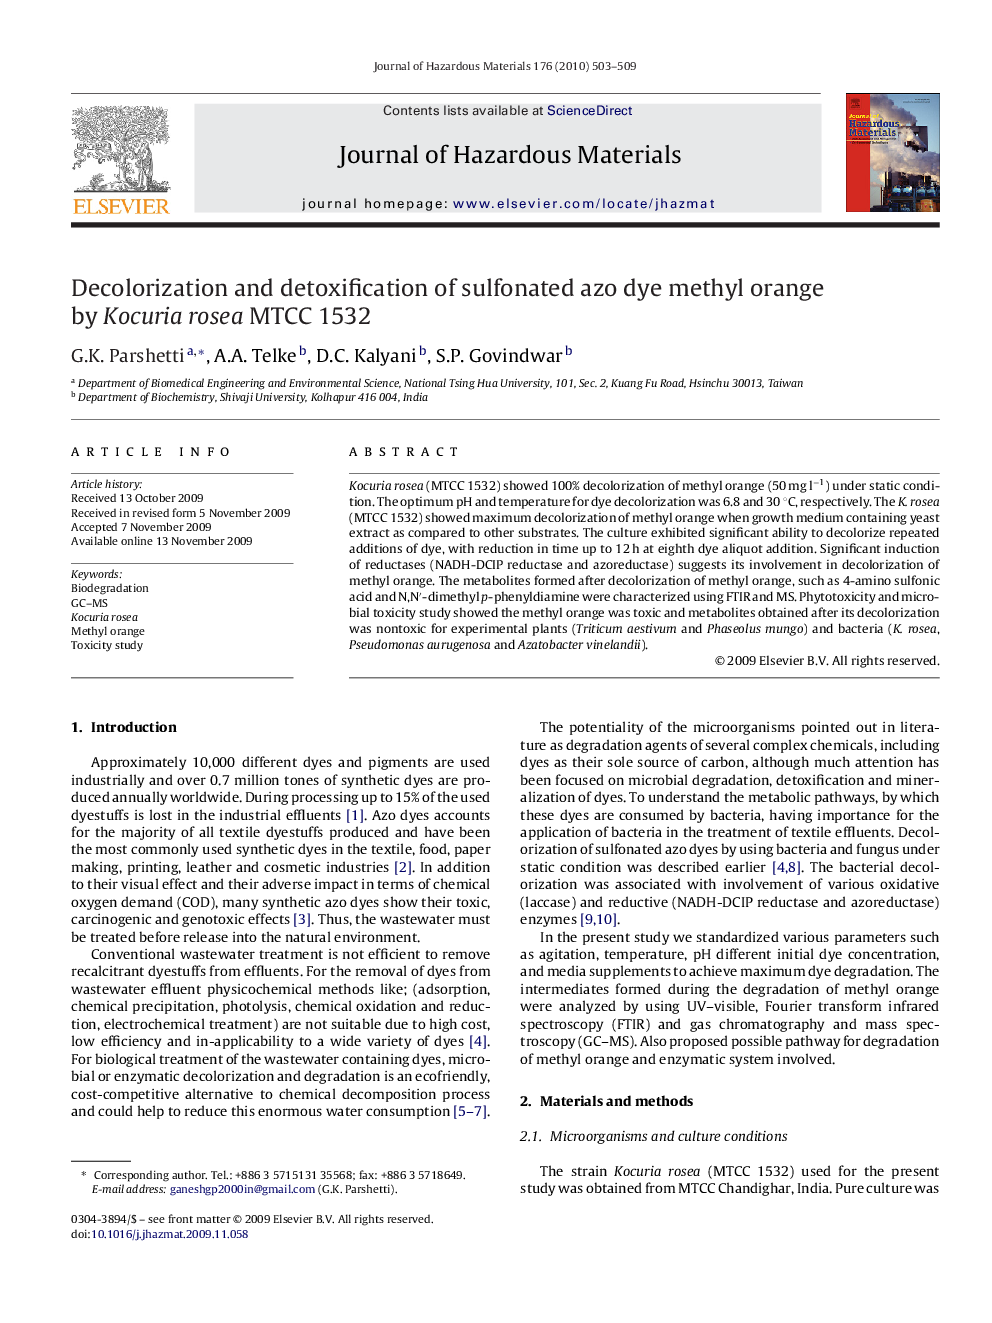 Decolorization and detoxification of sulfonated azo dye methyl orange by Kocuria rosea MTCC 1532